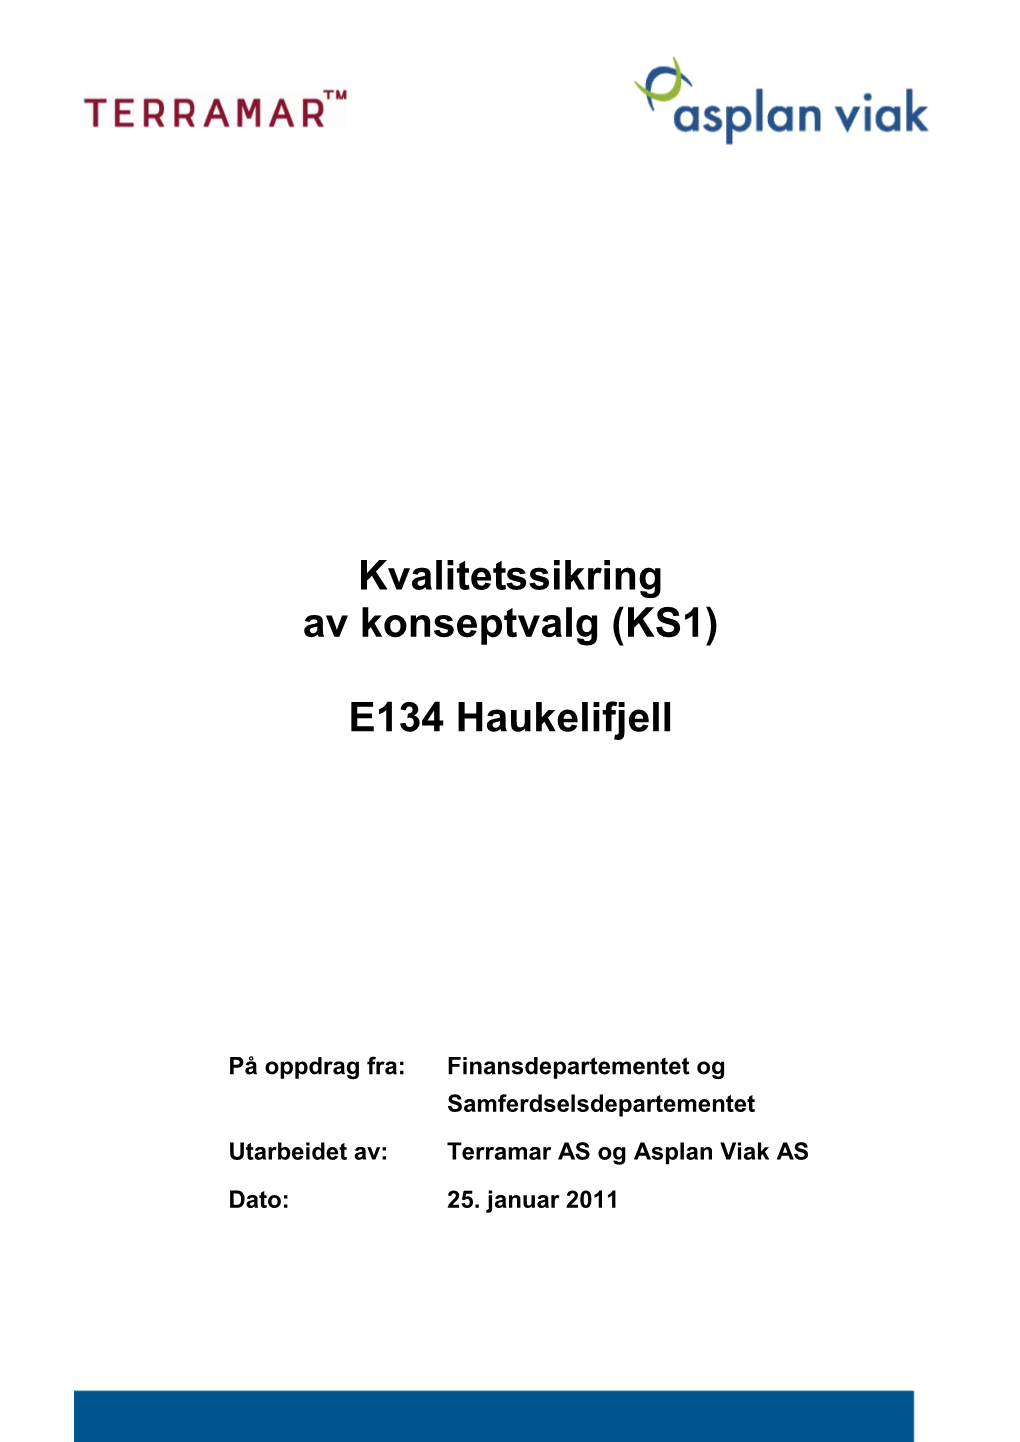 E134 Haukelifjell